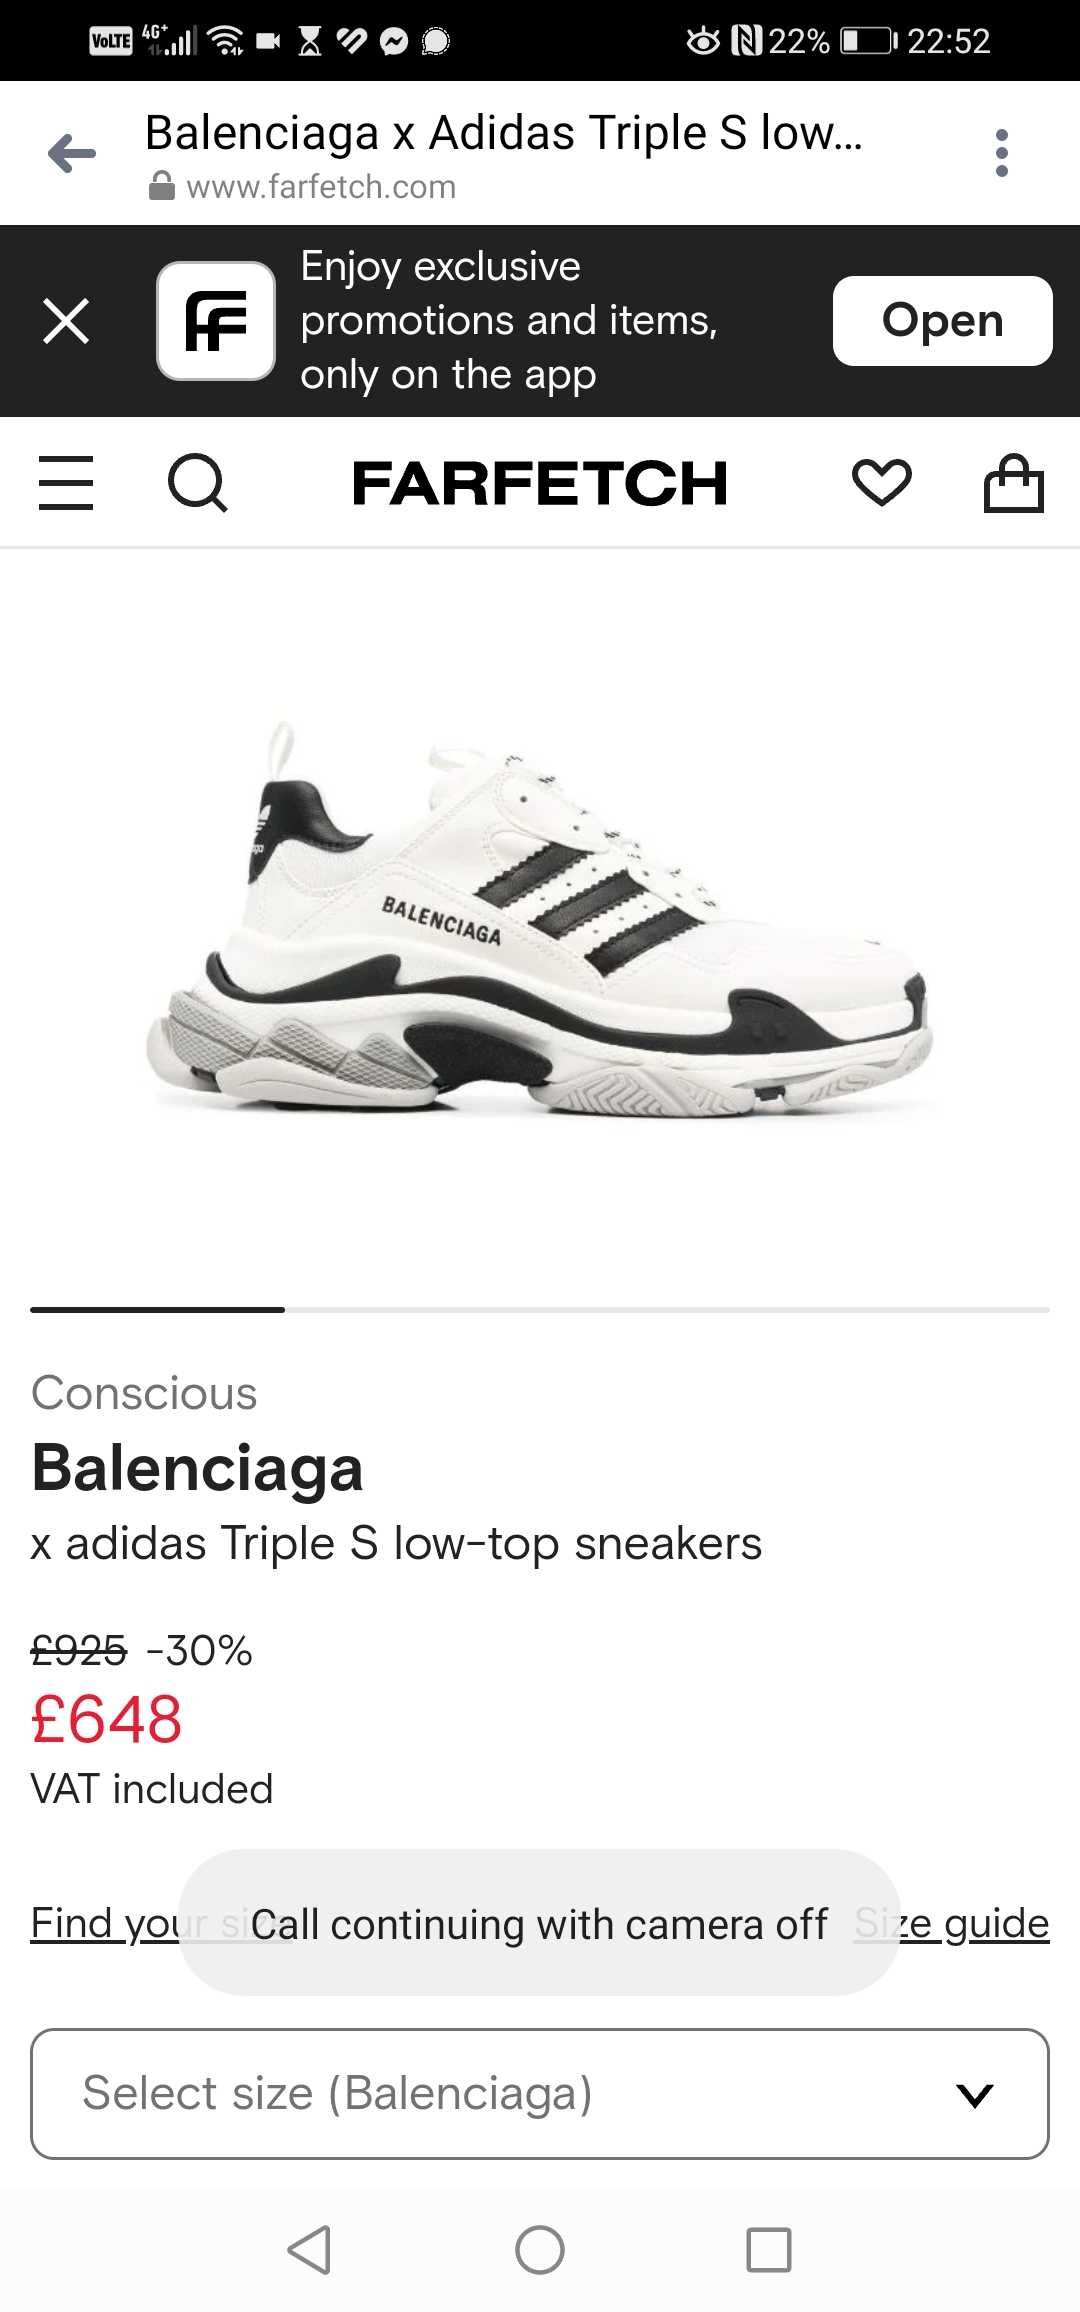 Balenciaga x adidas Triple S low-top sneakers